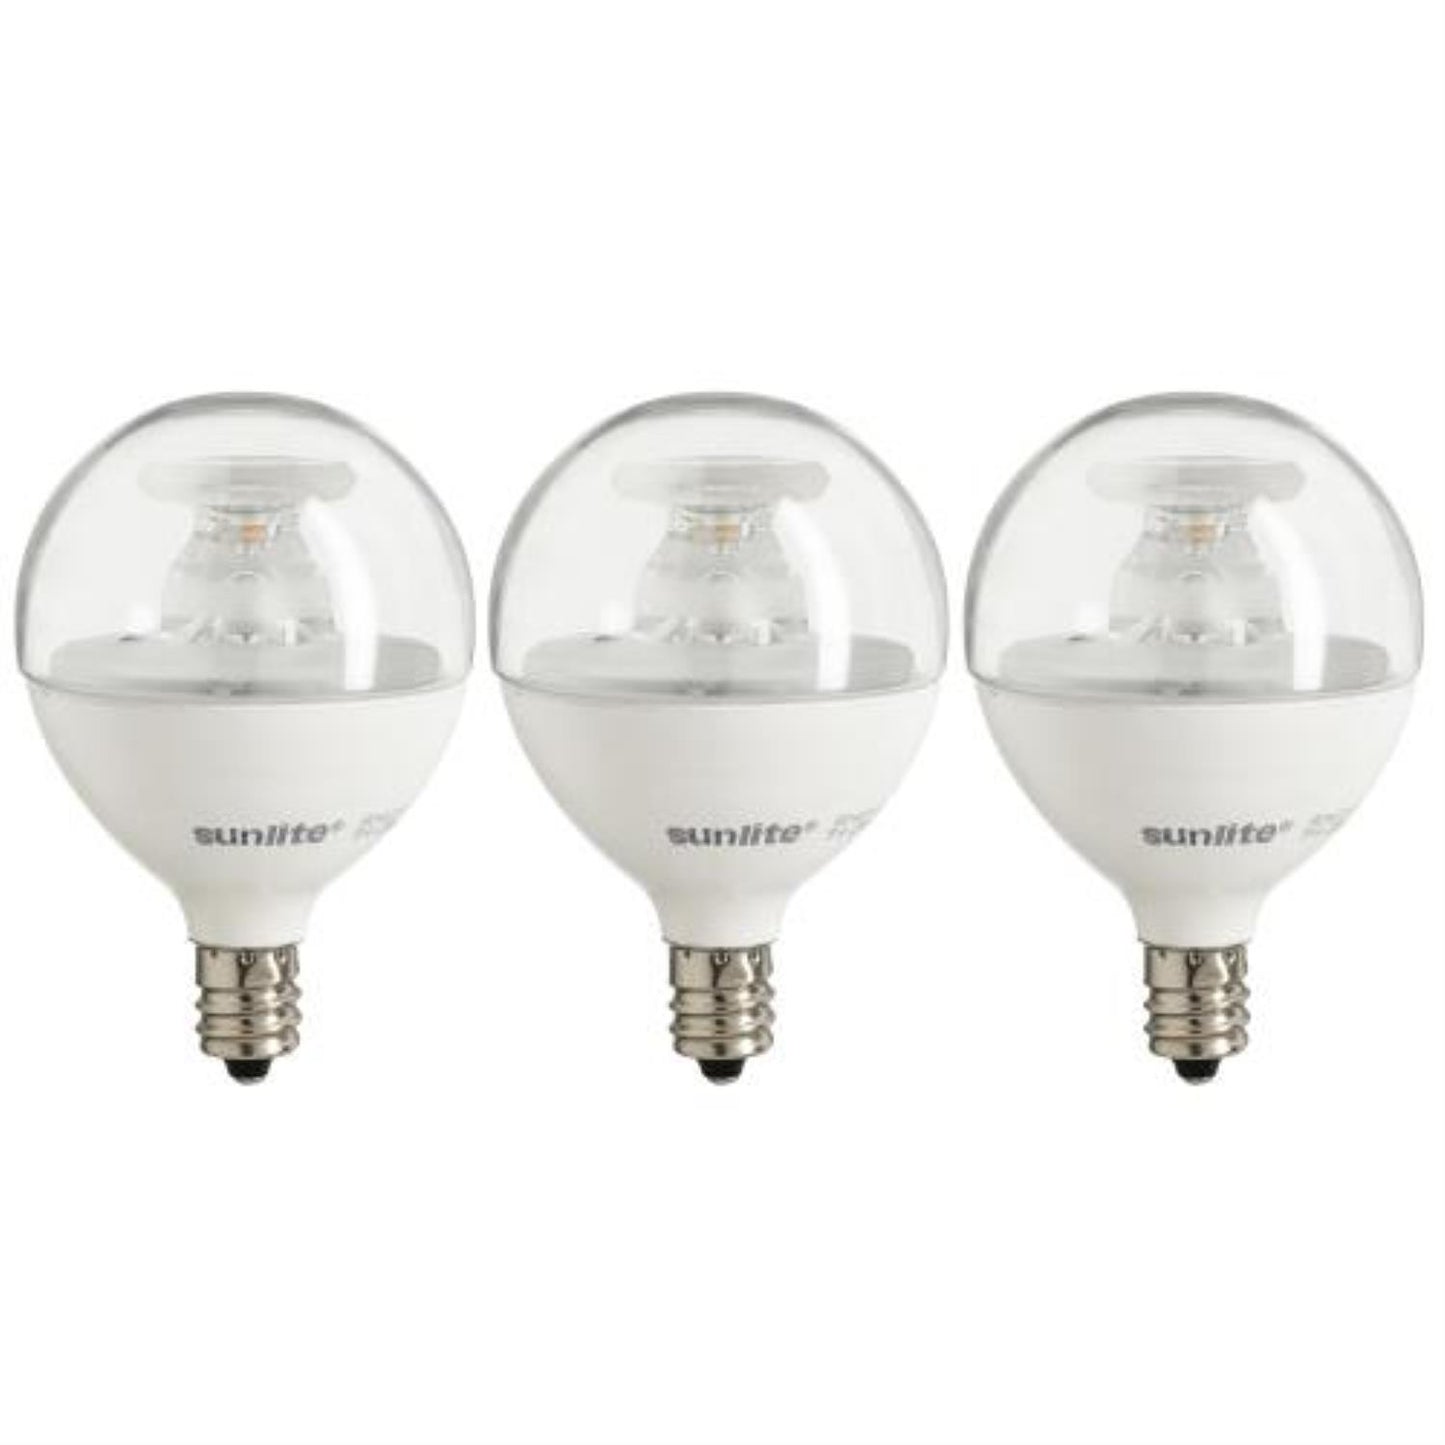 Sunlite LED G16.5 Globe 5W (40W Equal) Bulb Candelabra (E12) Base, Warm White